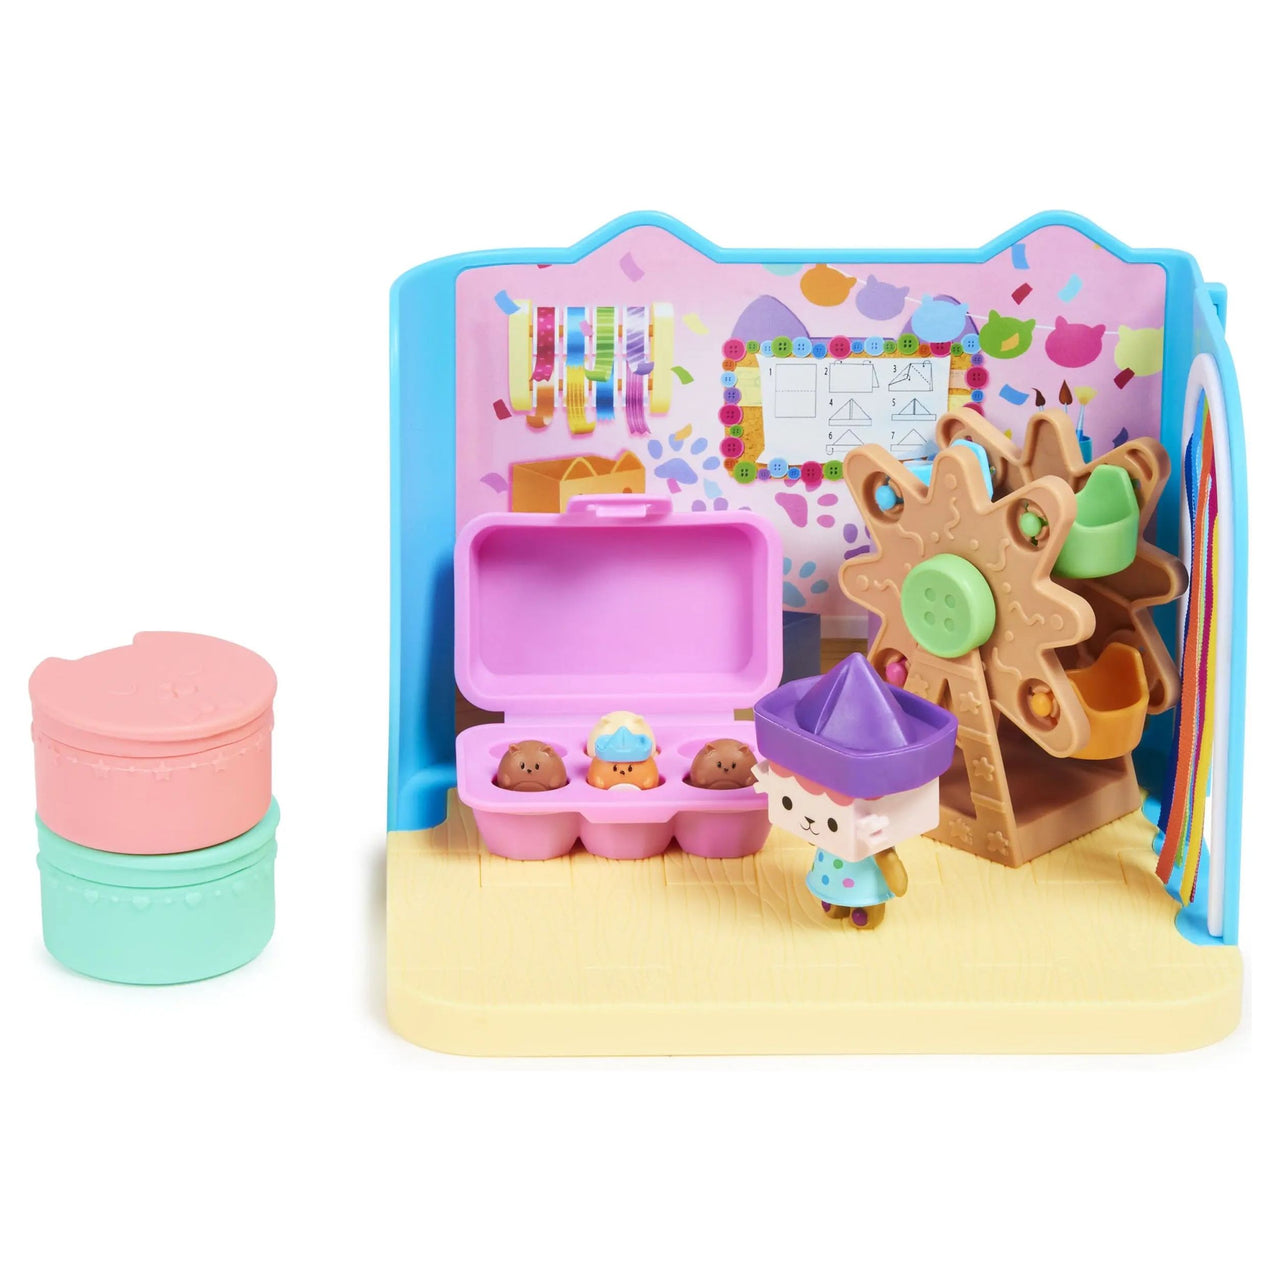 Gabby's Dollhouse Baby Box Craft-a-Riffic Room Gabby's Dollhouse